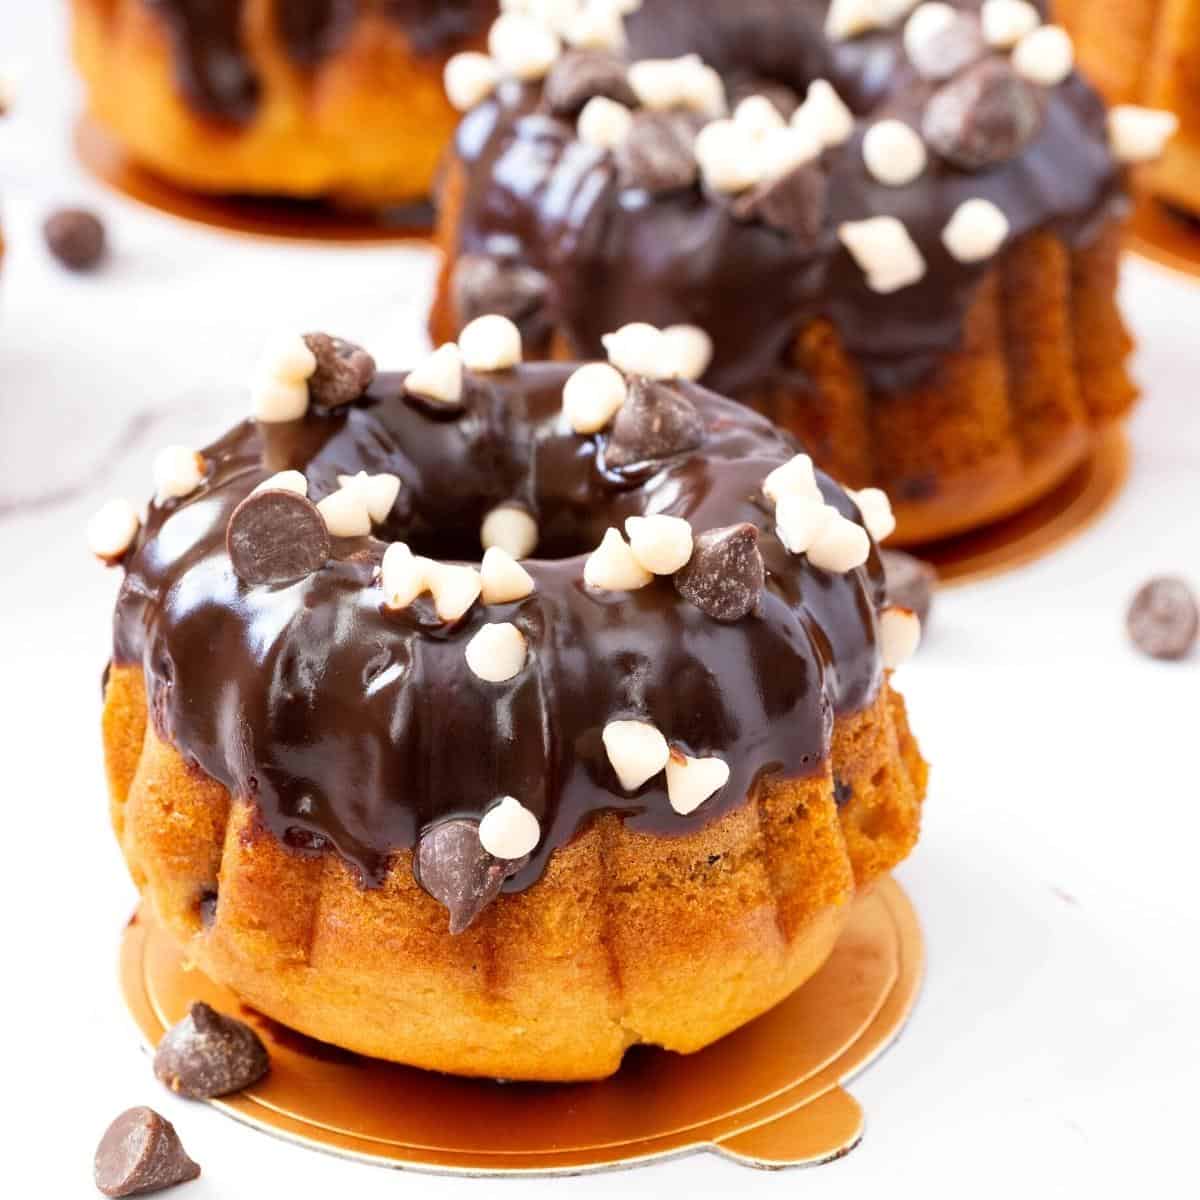 Mini cakes with chocolate glaze.